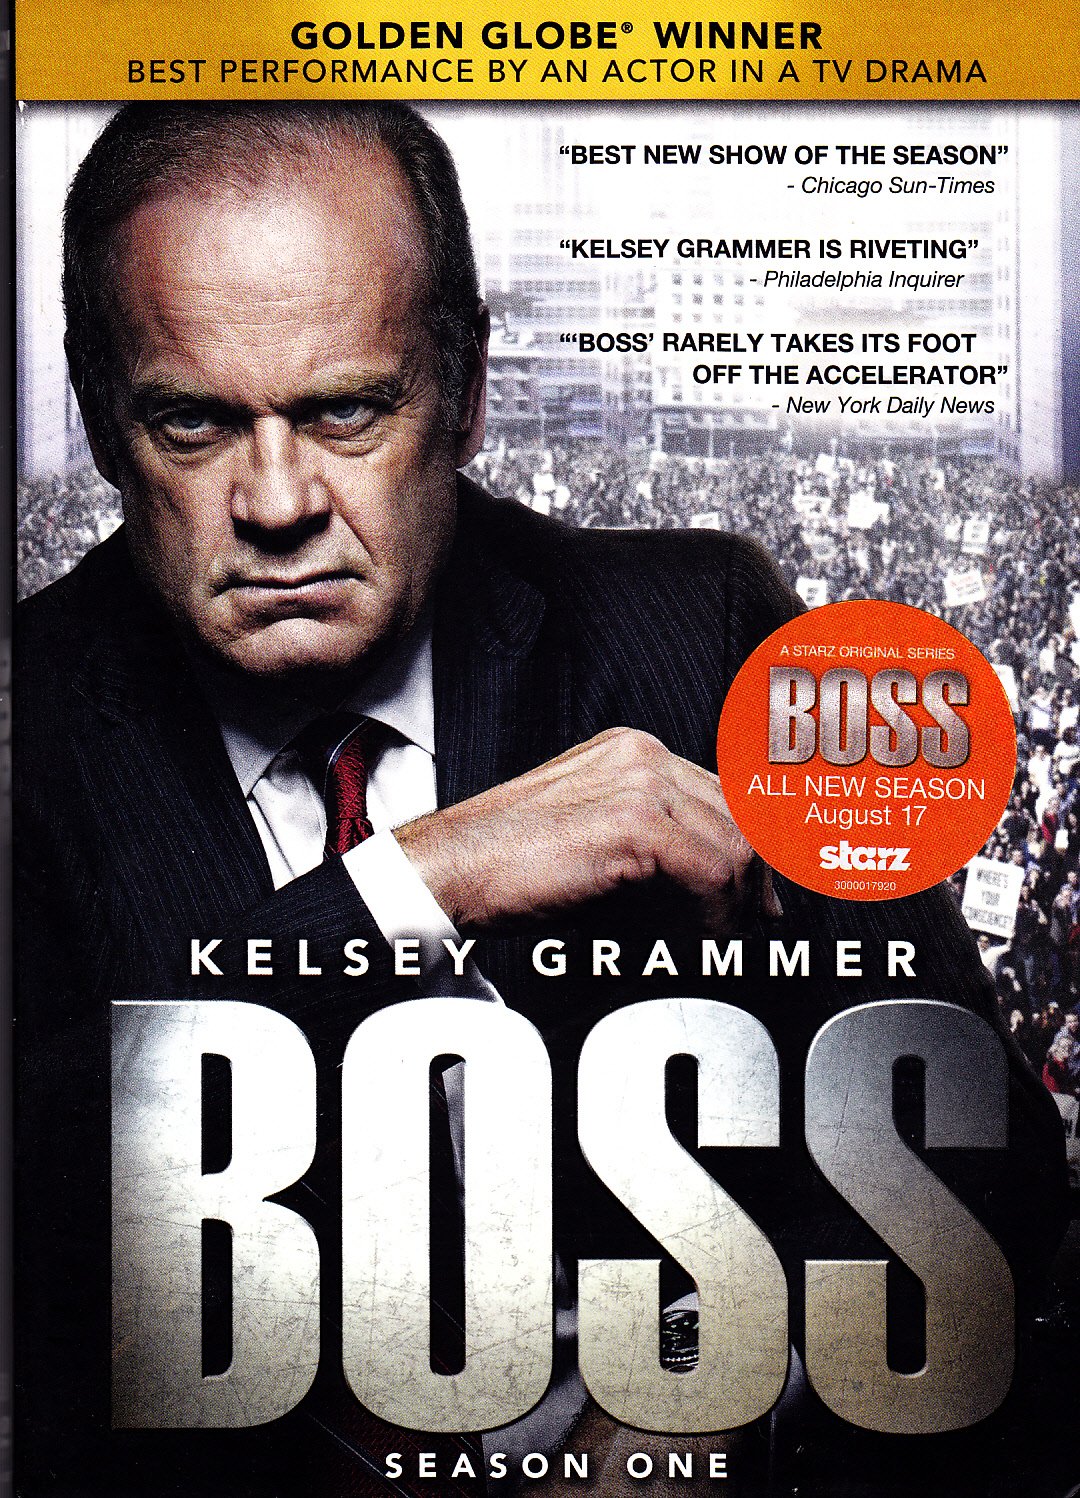 Boss - Complete 1st Season DVD 2012, 3-Disc Set - Very Good